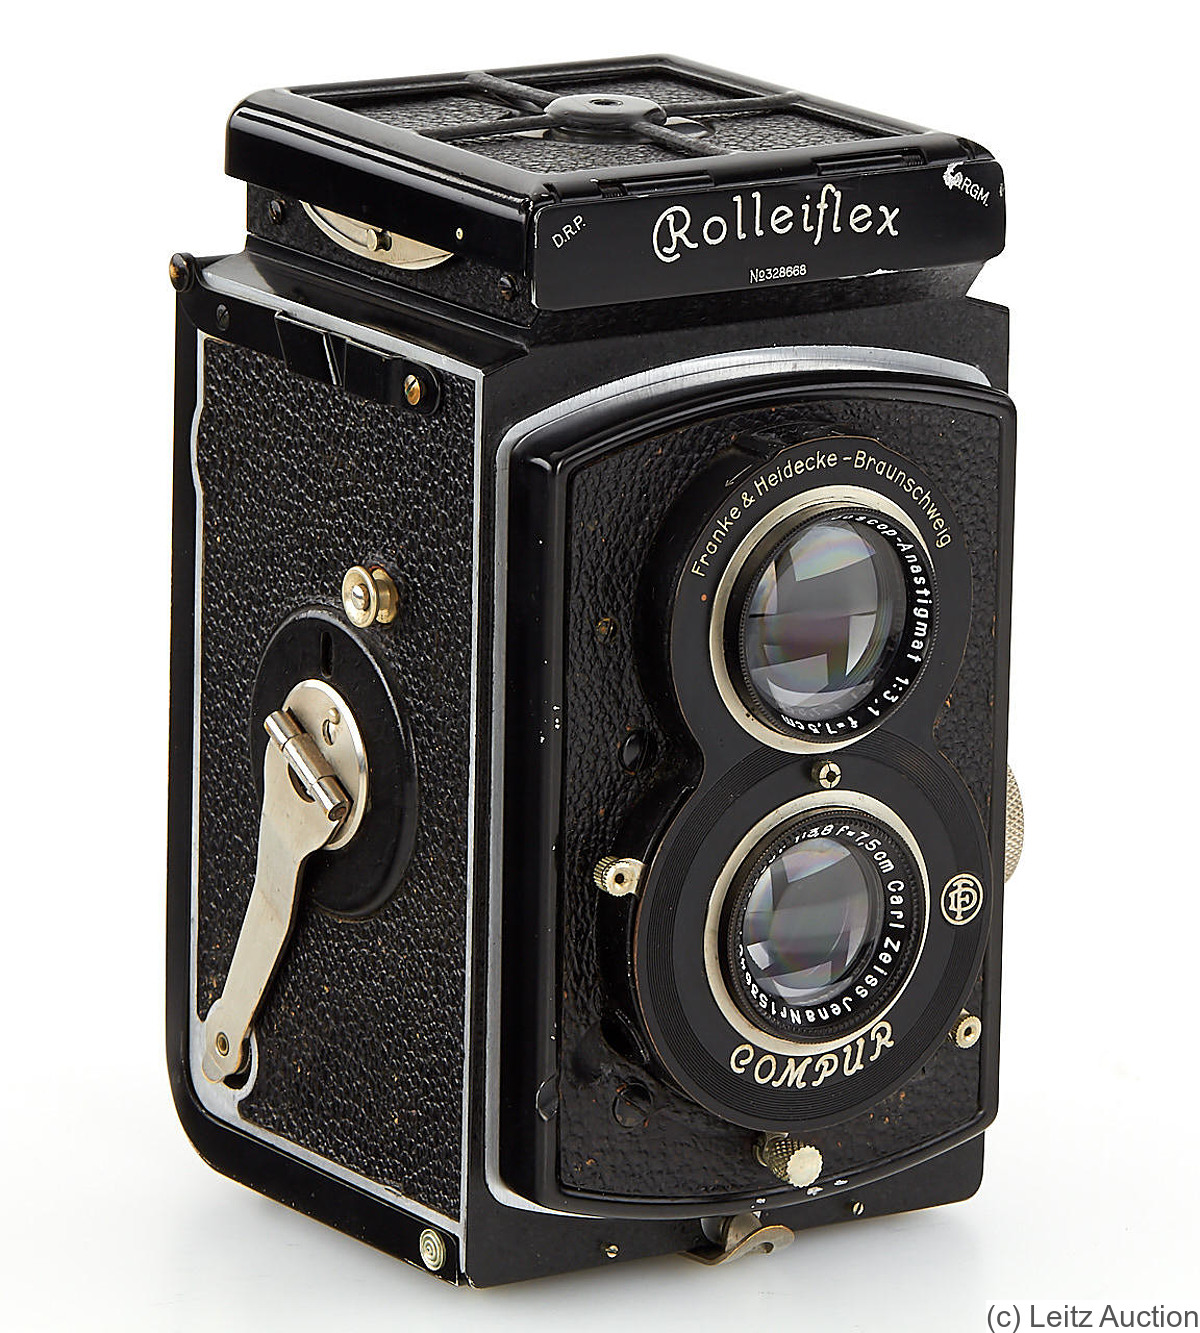 Rollei: Rolleiflex Old Standard camera